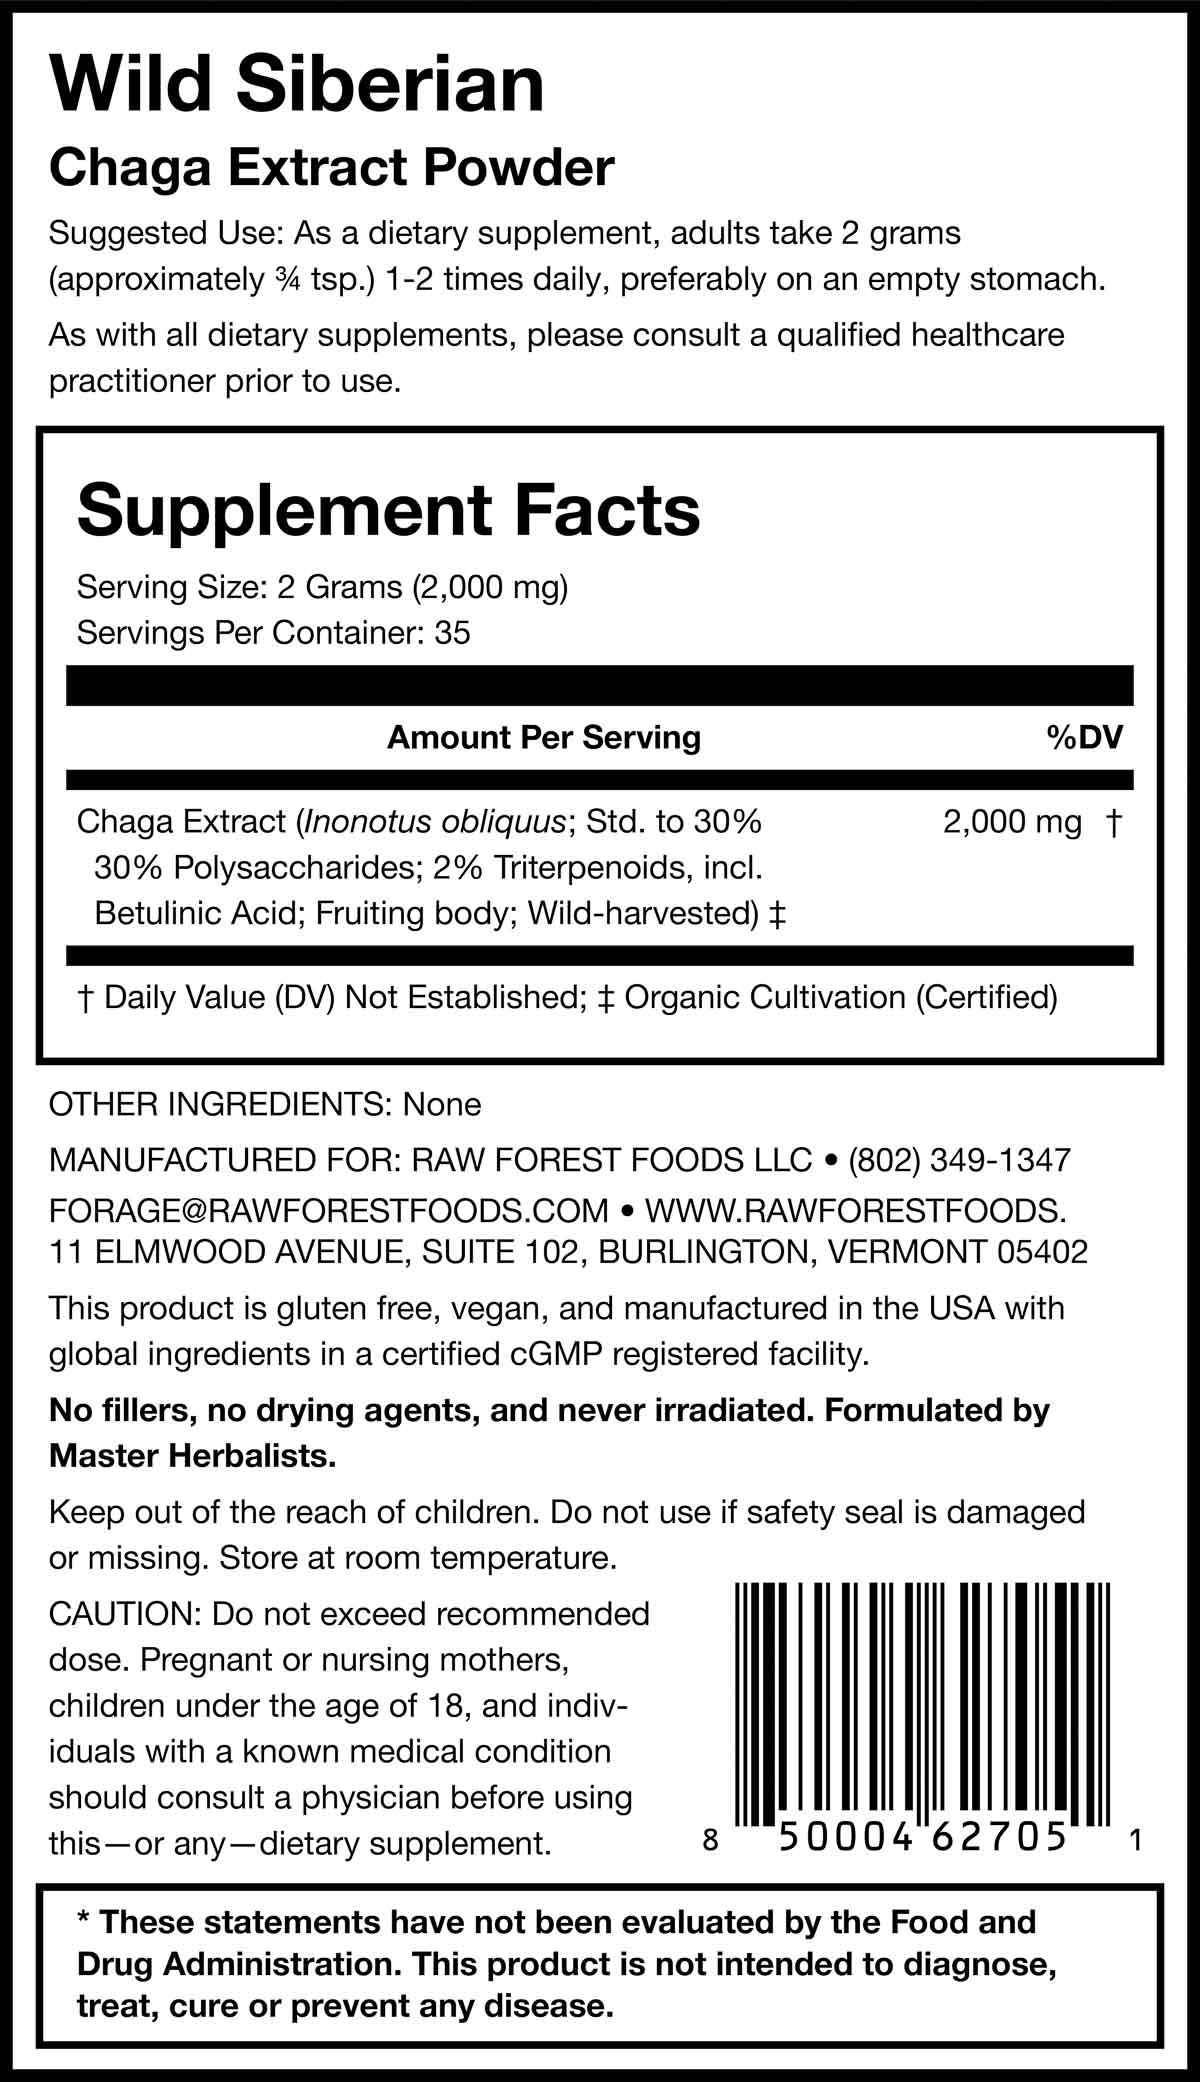 Wild Siberian Chaga Extract Powder Supplement Facts Panel